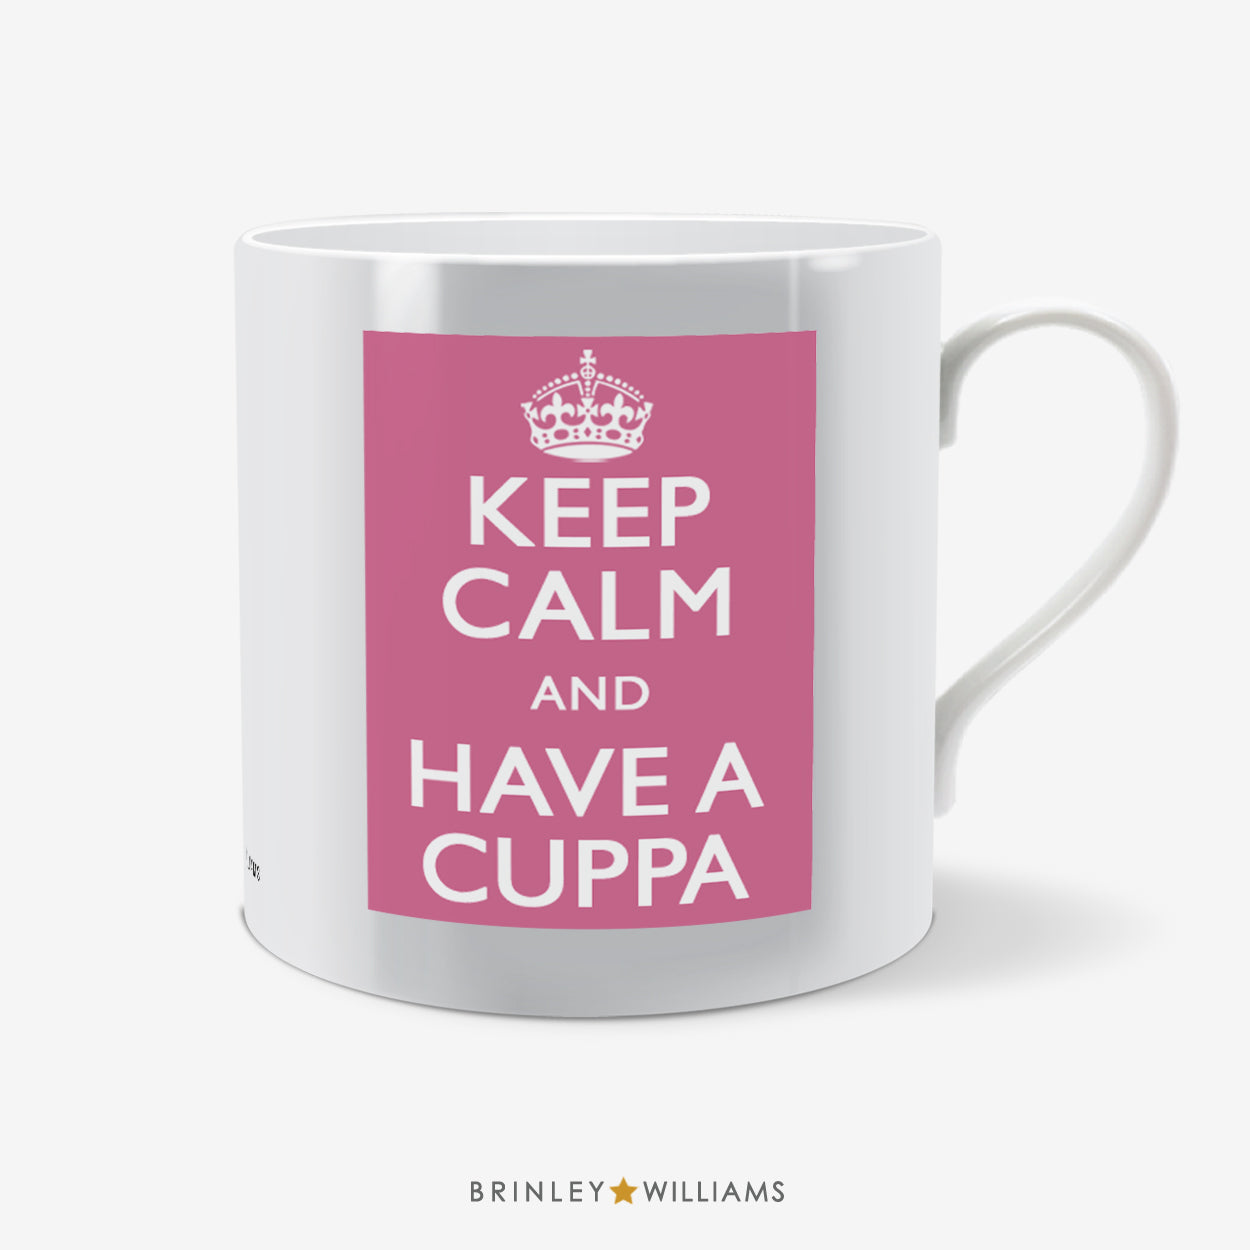 Keep Calm and have a Cuppa Fun Mug - Pink